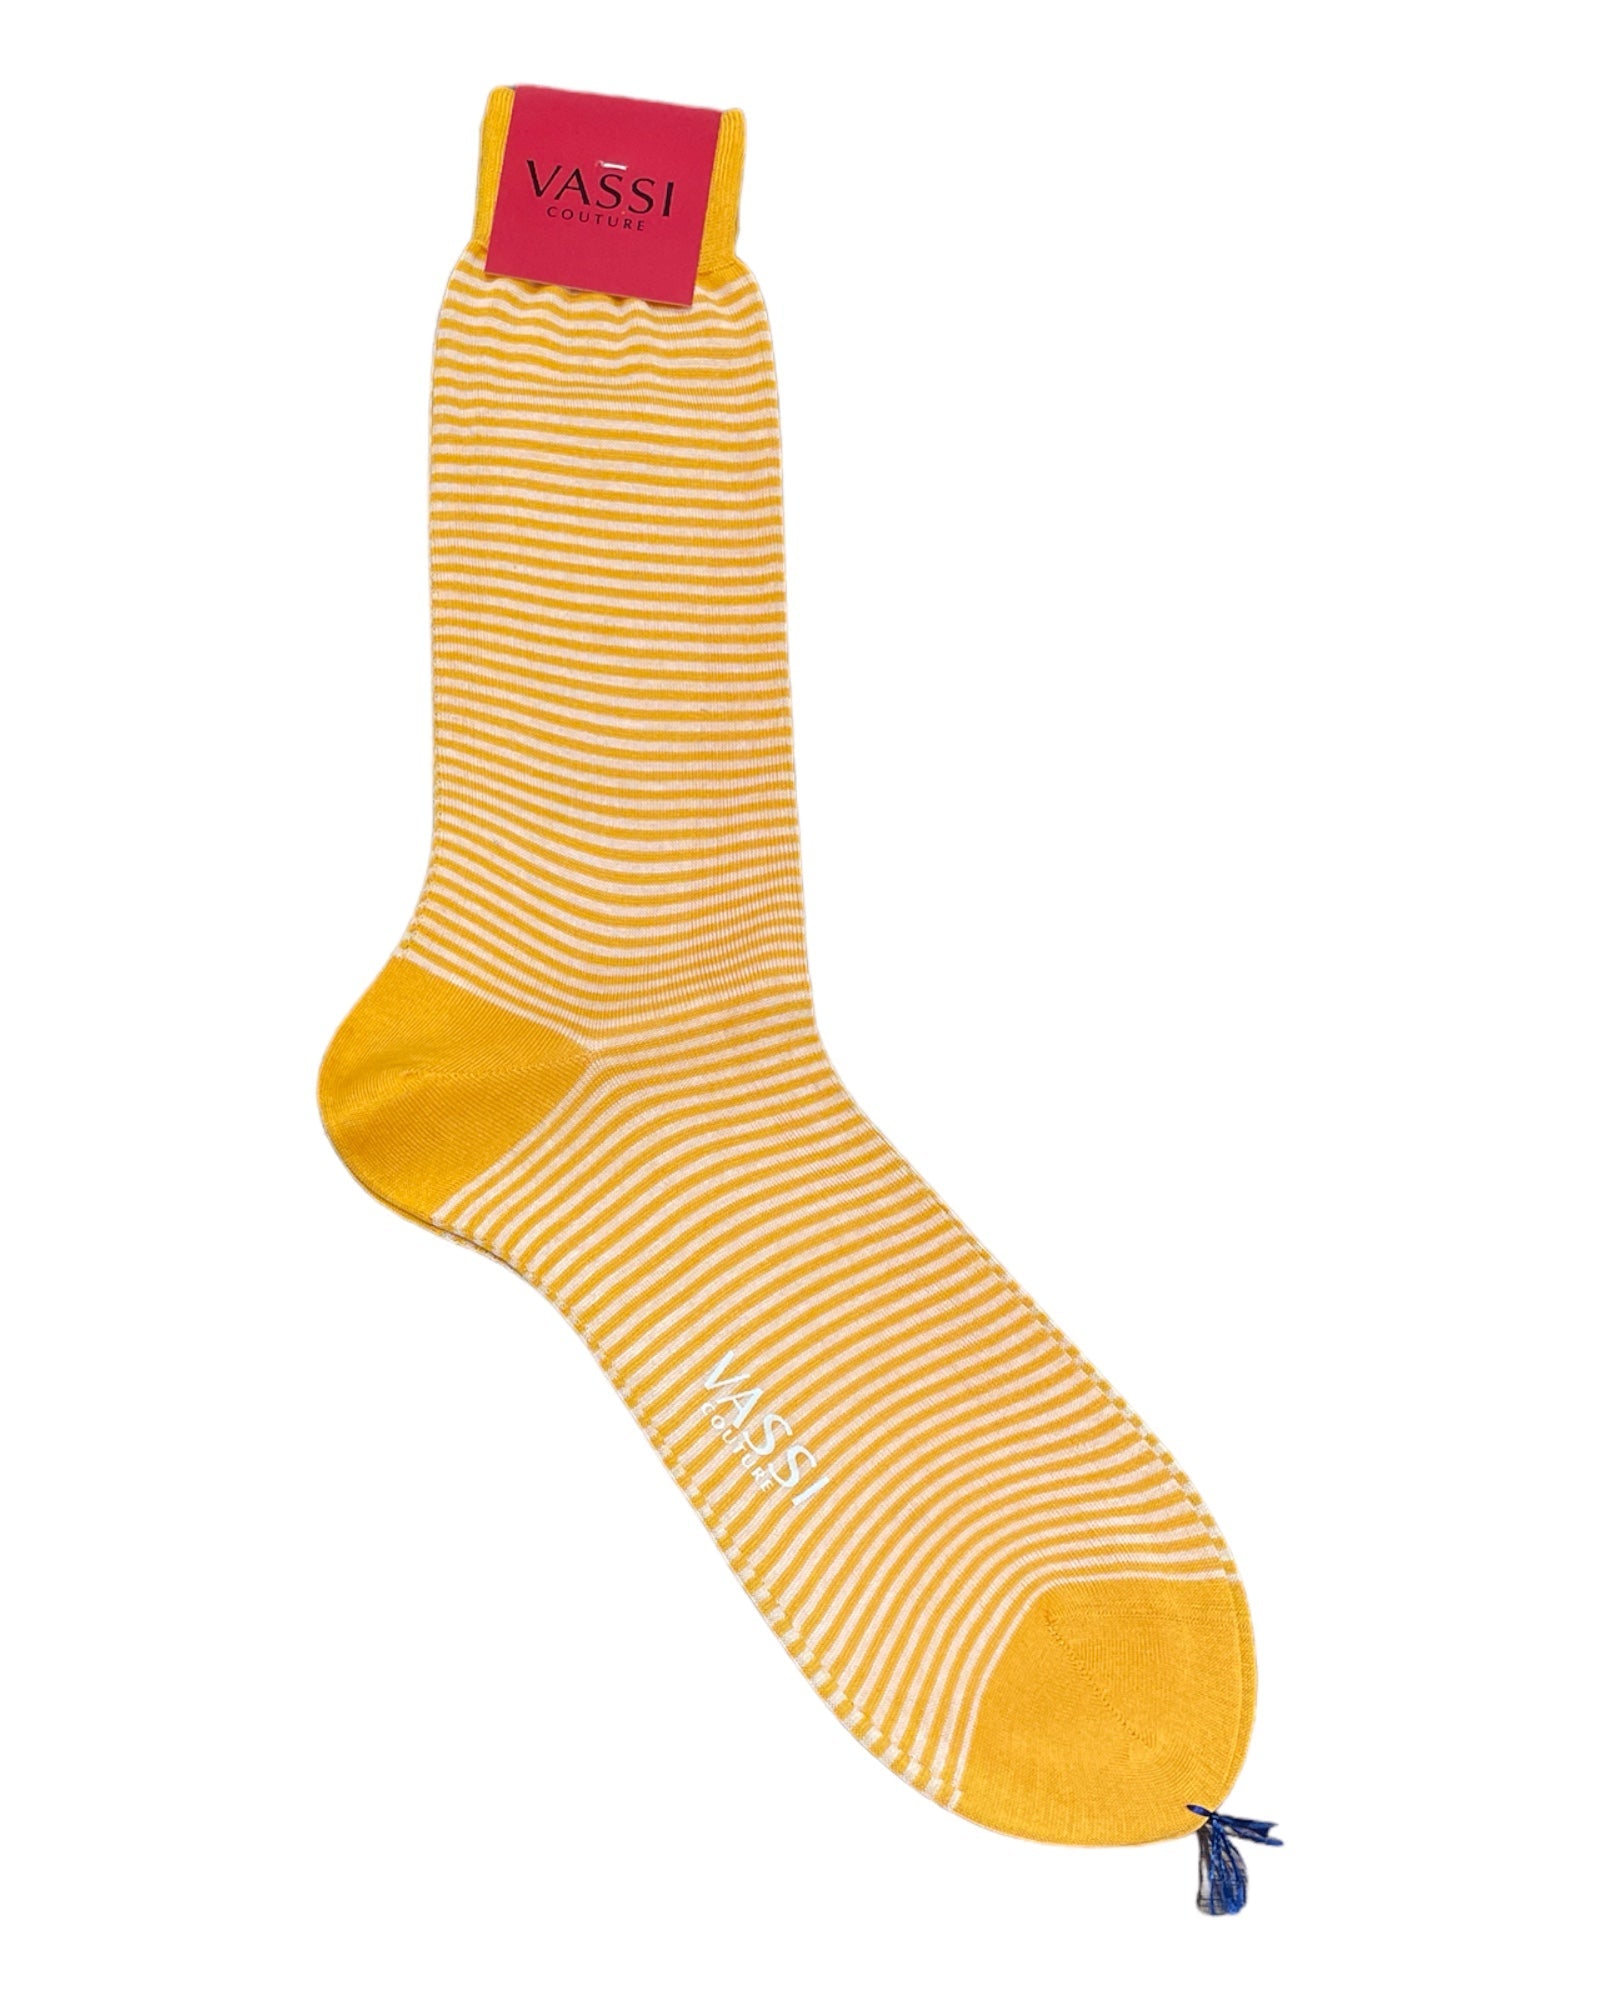 Extra-fine Horizontal Striped Cotton Socks - Mustard Socks